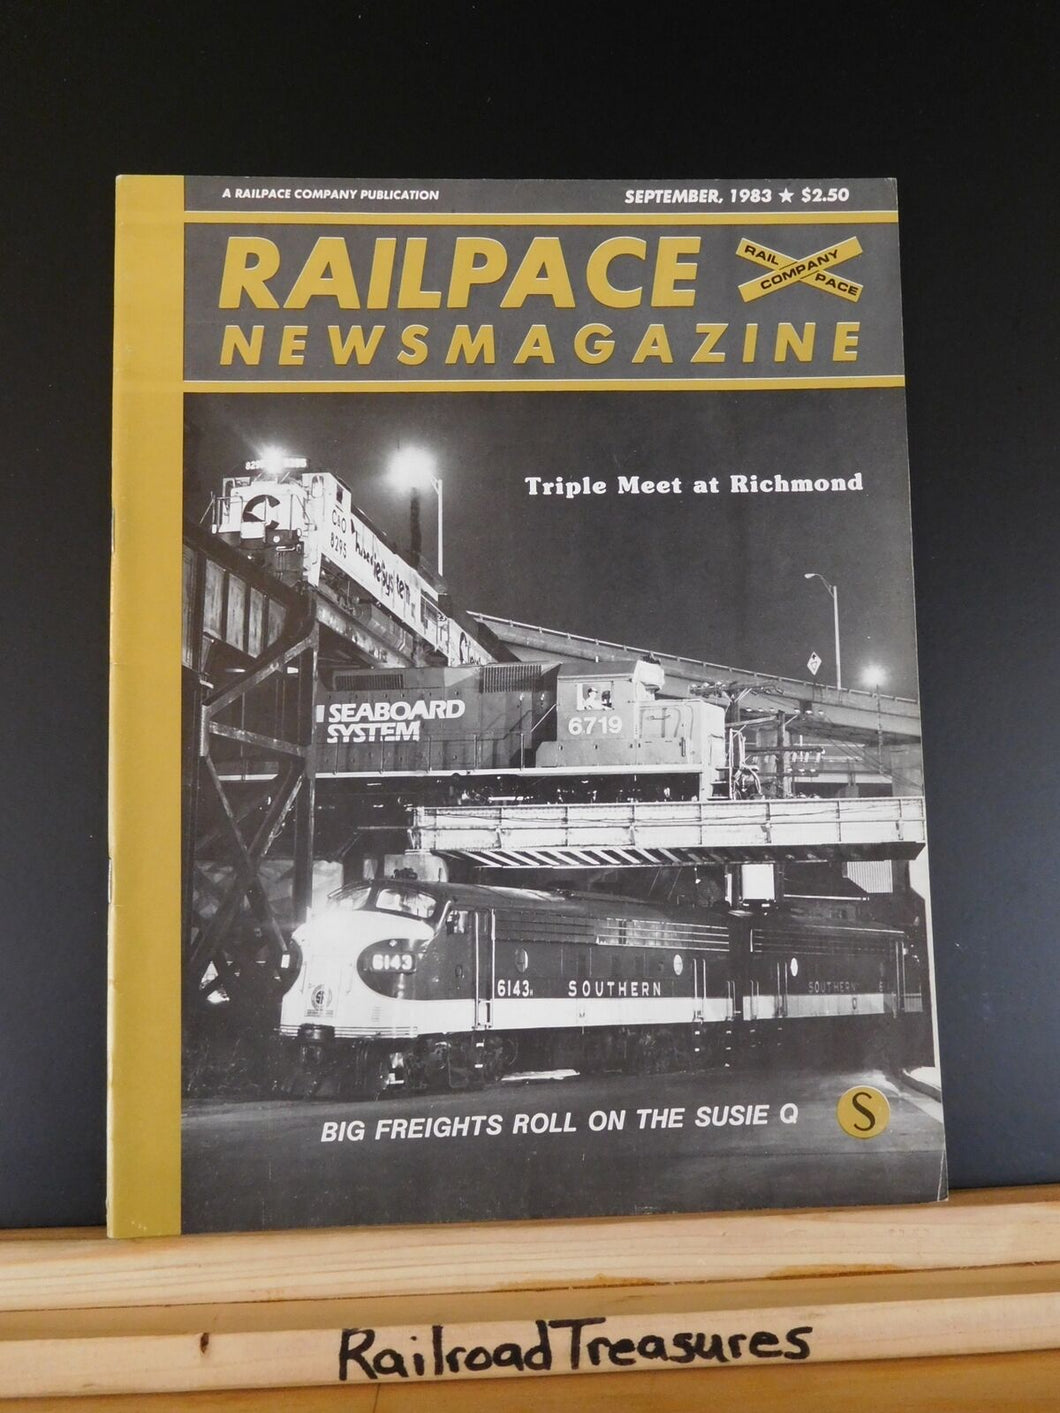 Rail Pace News Magazine 1983 September Railpace Big freights on Susie Q